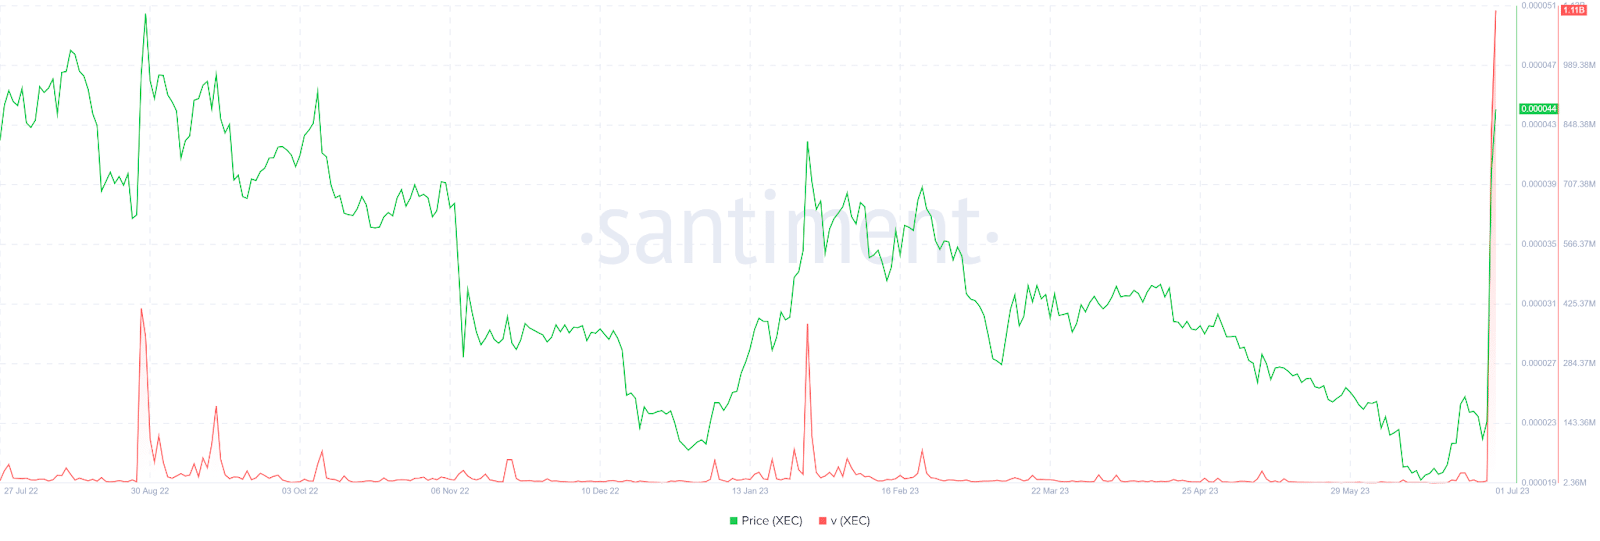 XEC Trading volume soared over $1.1B